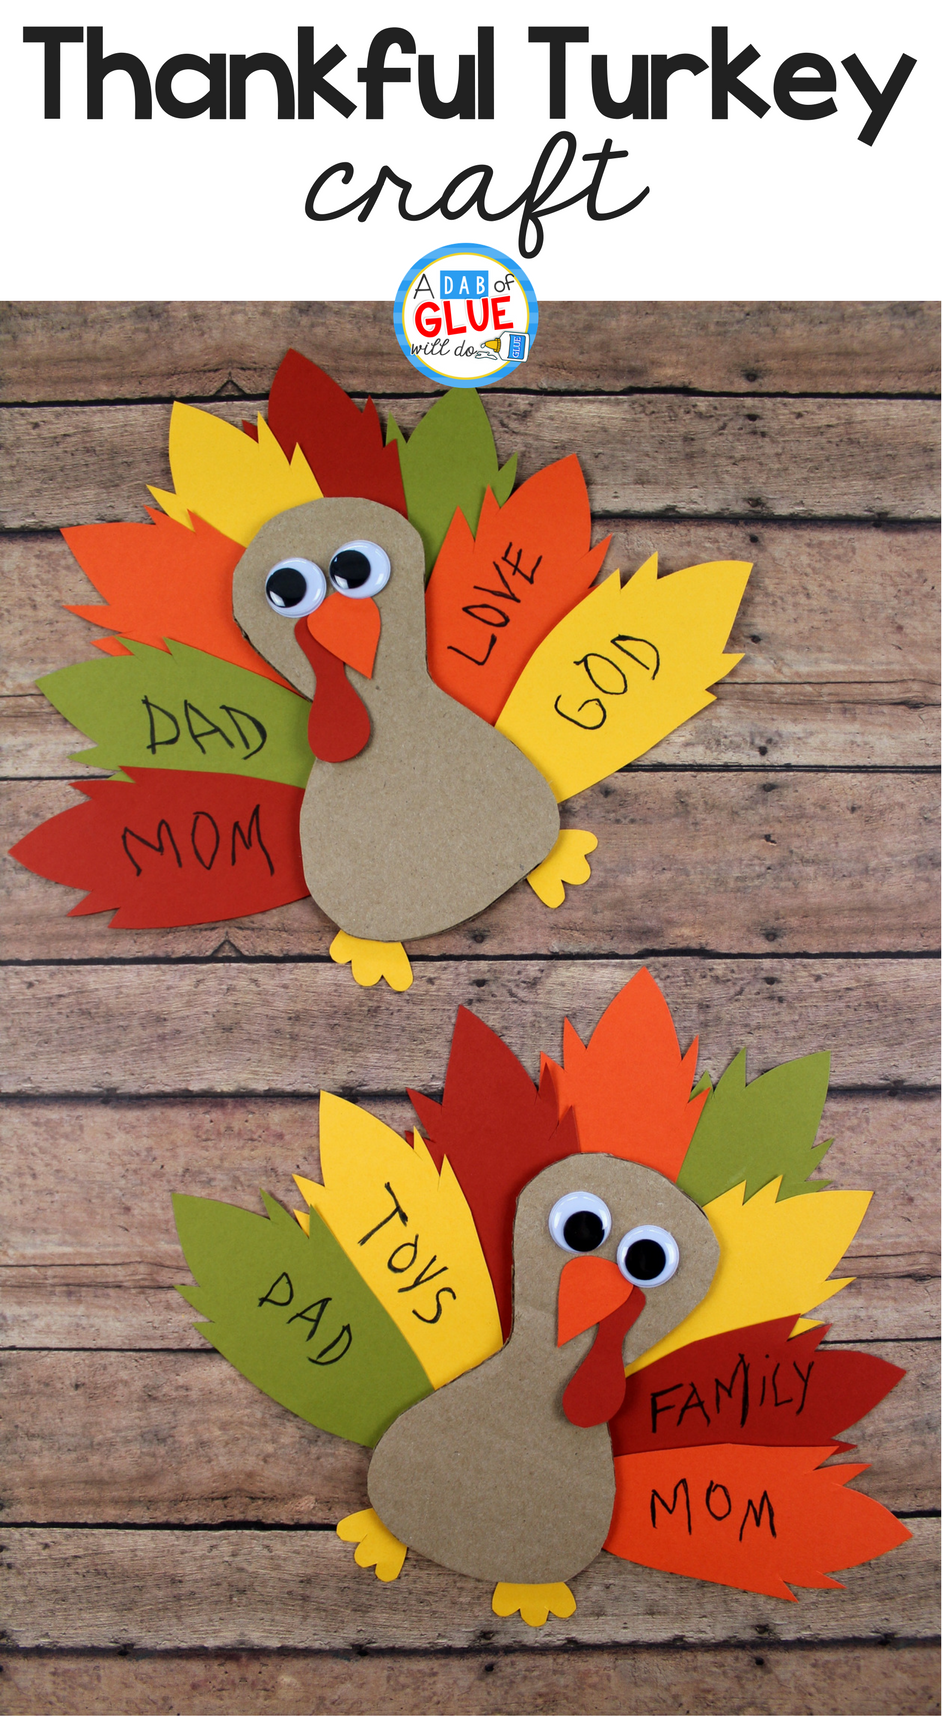 Cardboard Thankful Turkey Craft -   24 thanksgiving crafts for school
 ideas